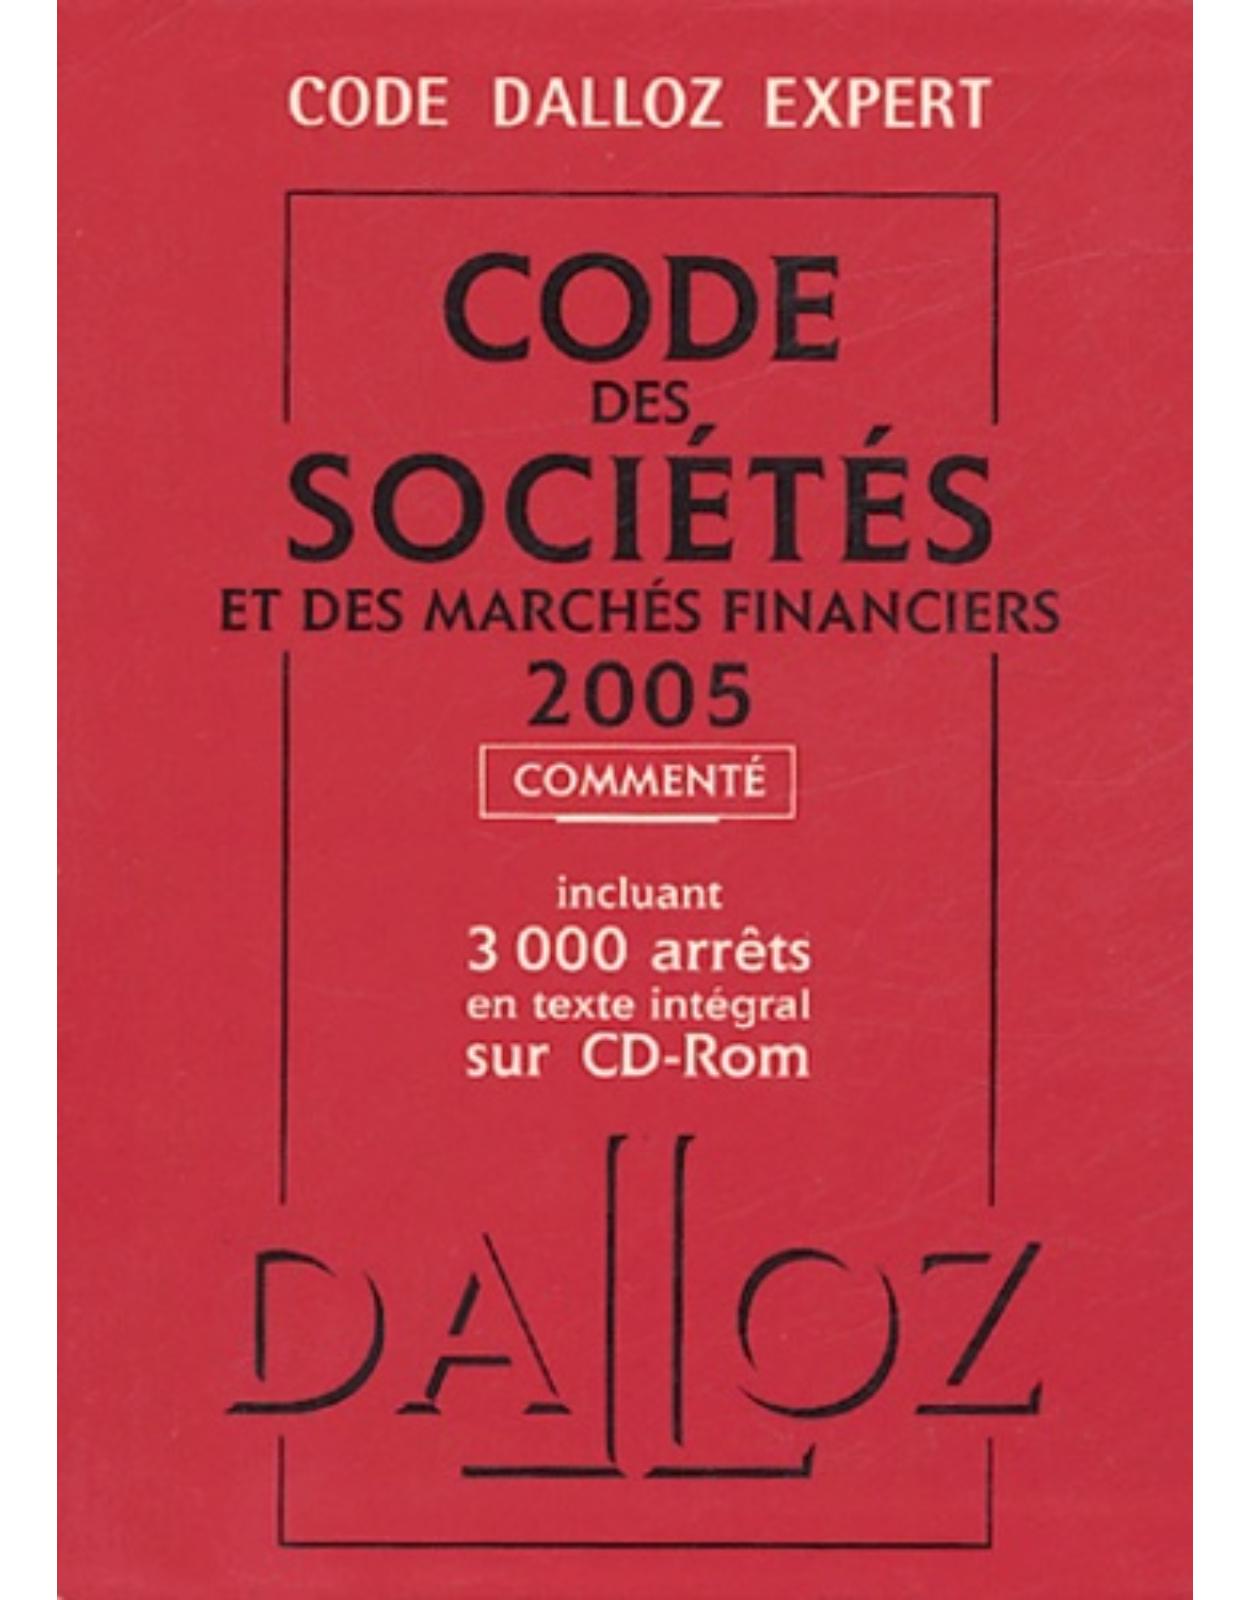 Code Dalloz Expert. Code des sociétés 2005